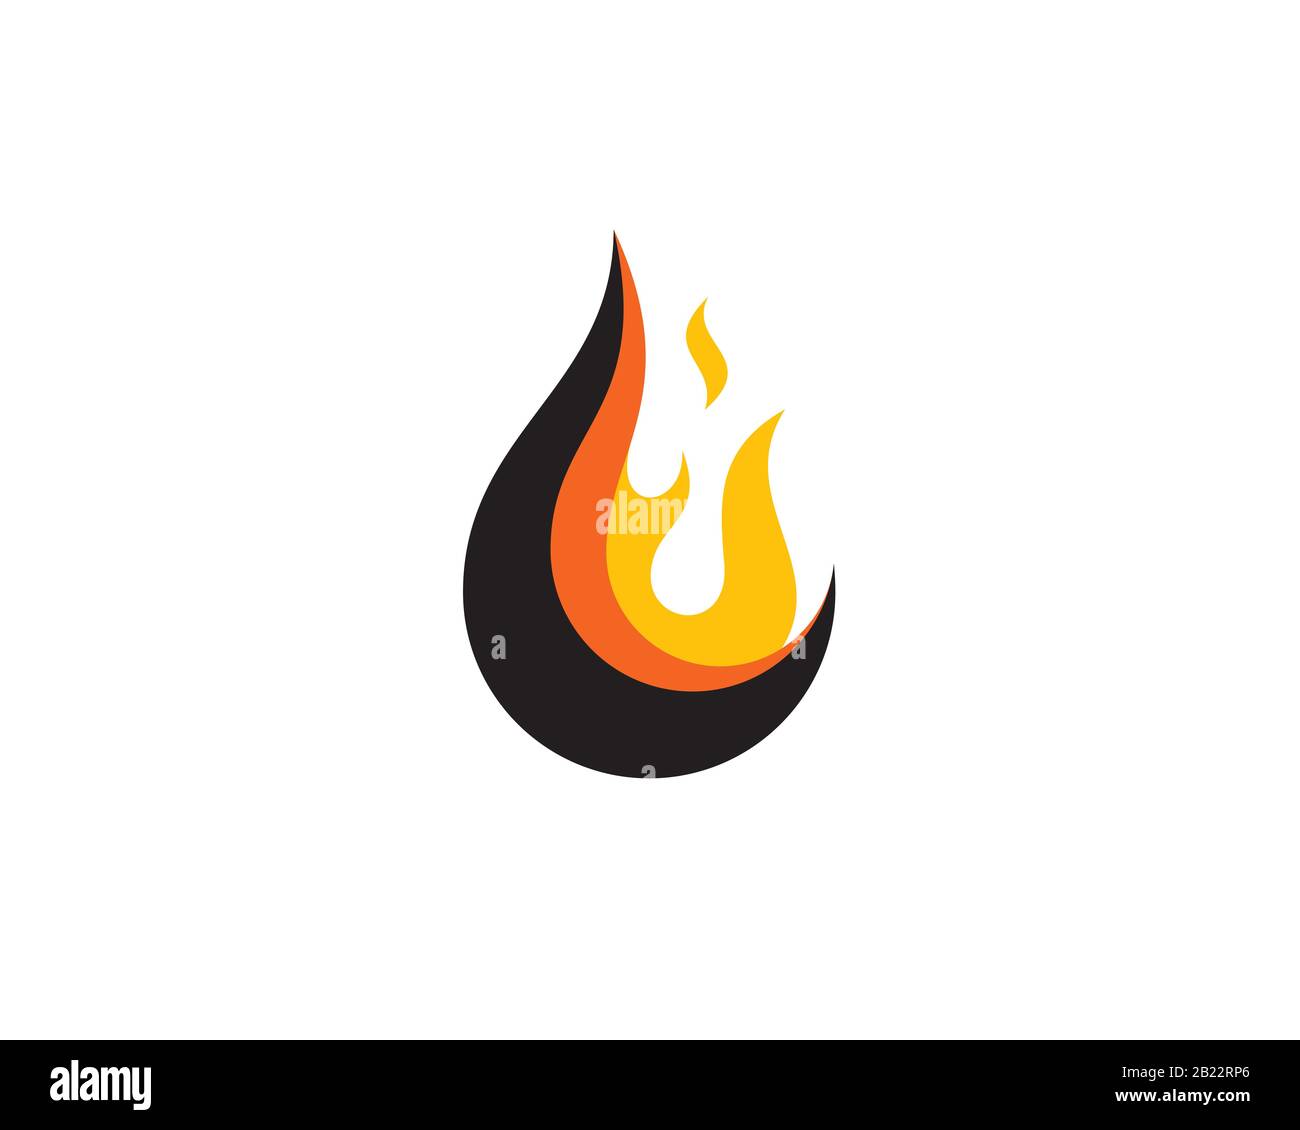 simple flat logo symbol icon of a black orange yellow flame fire ball Stock  Vector Image & Art - Alamy